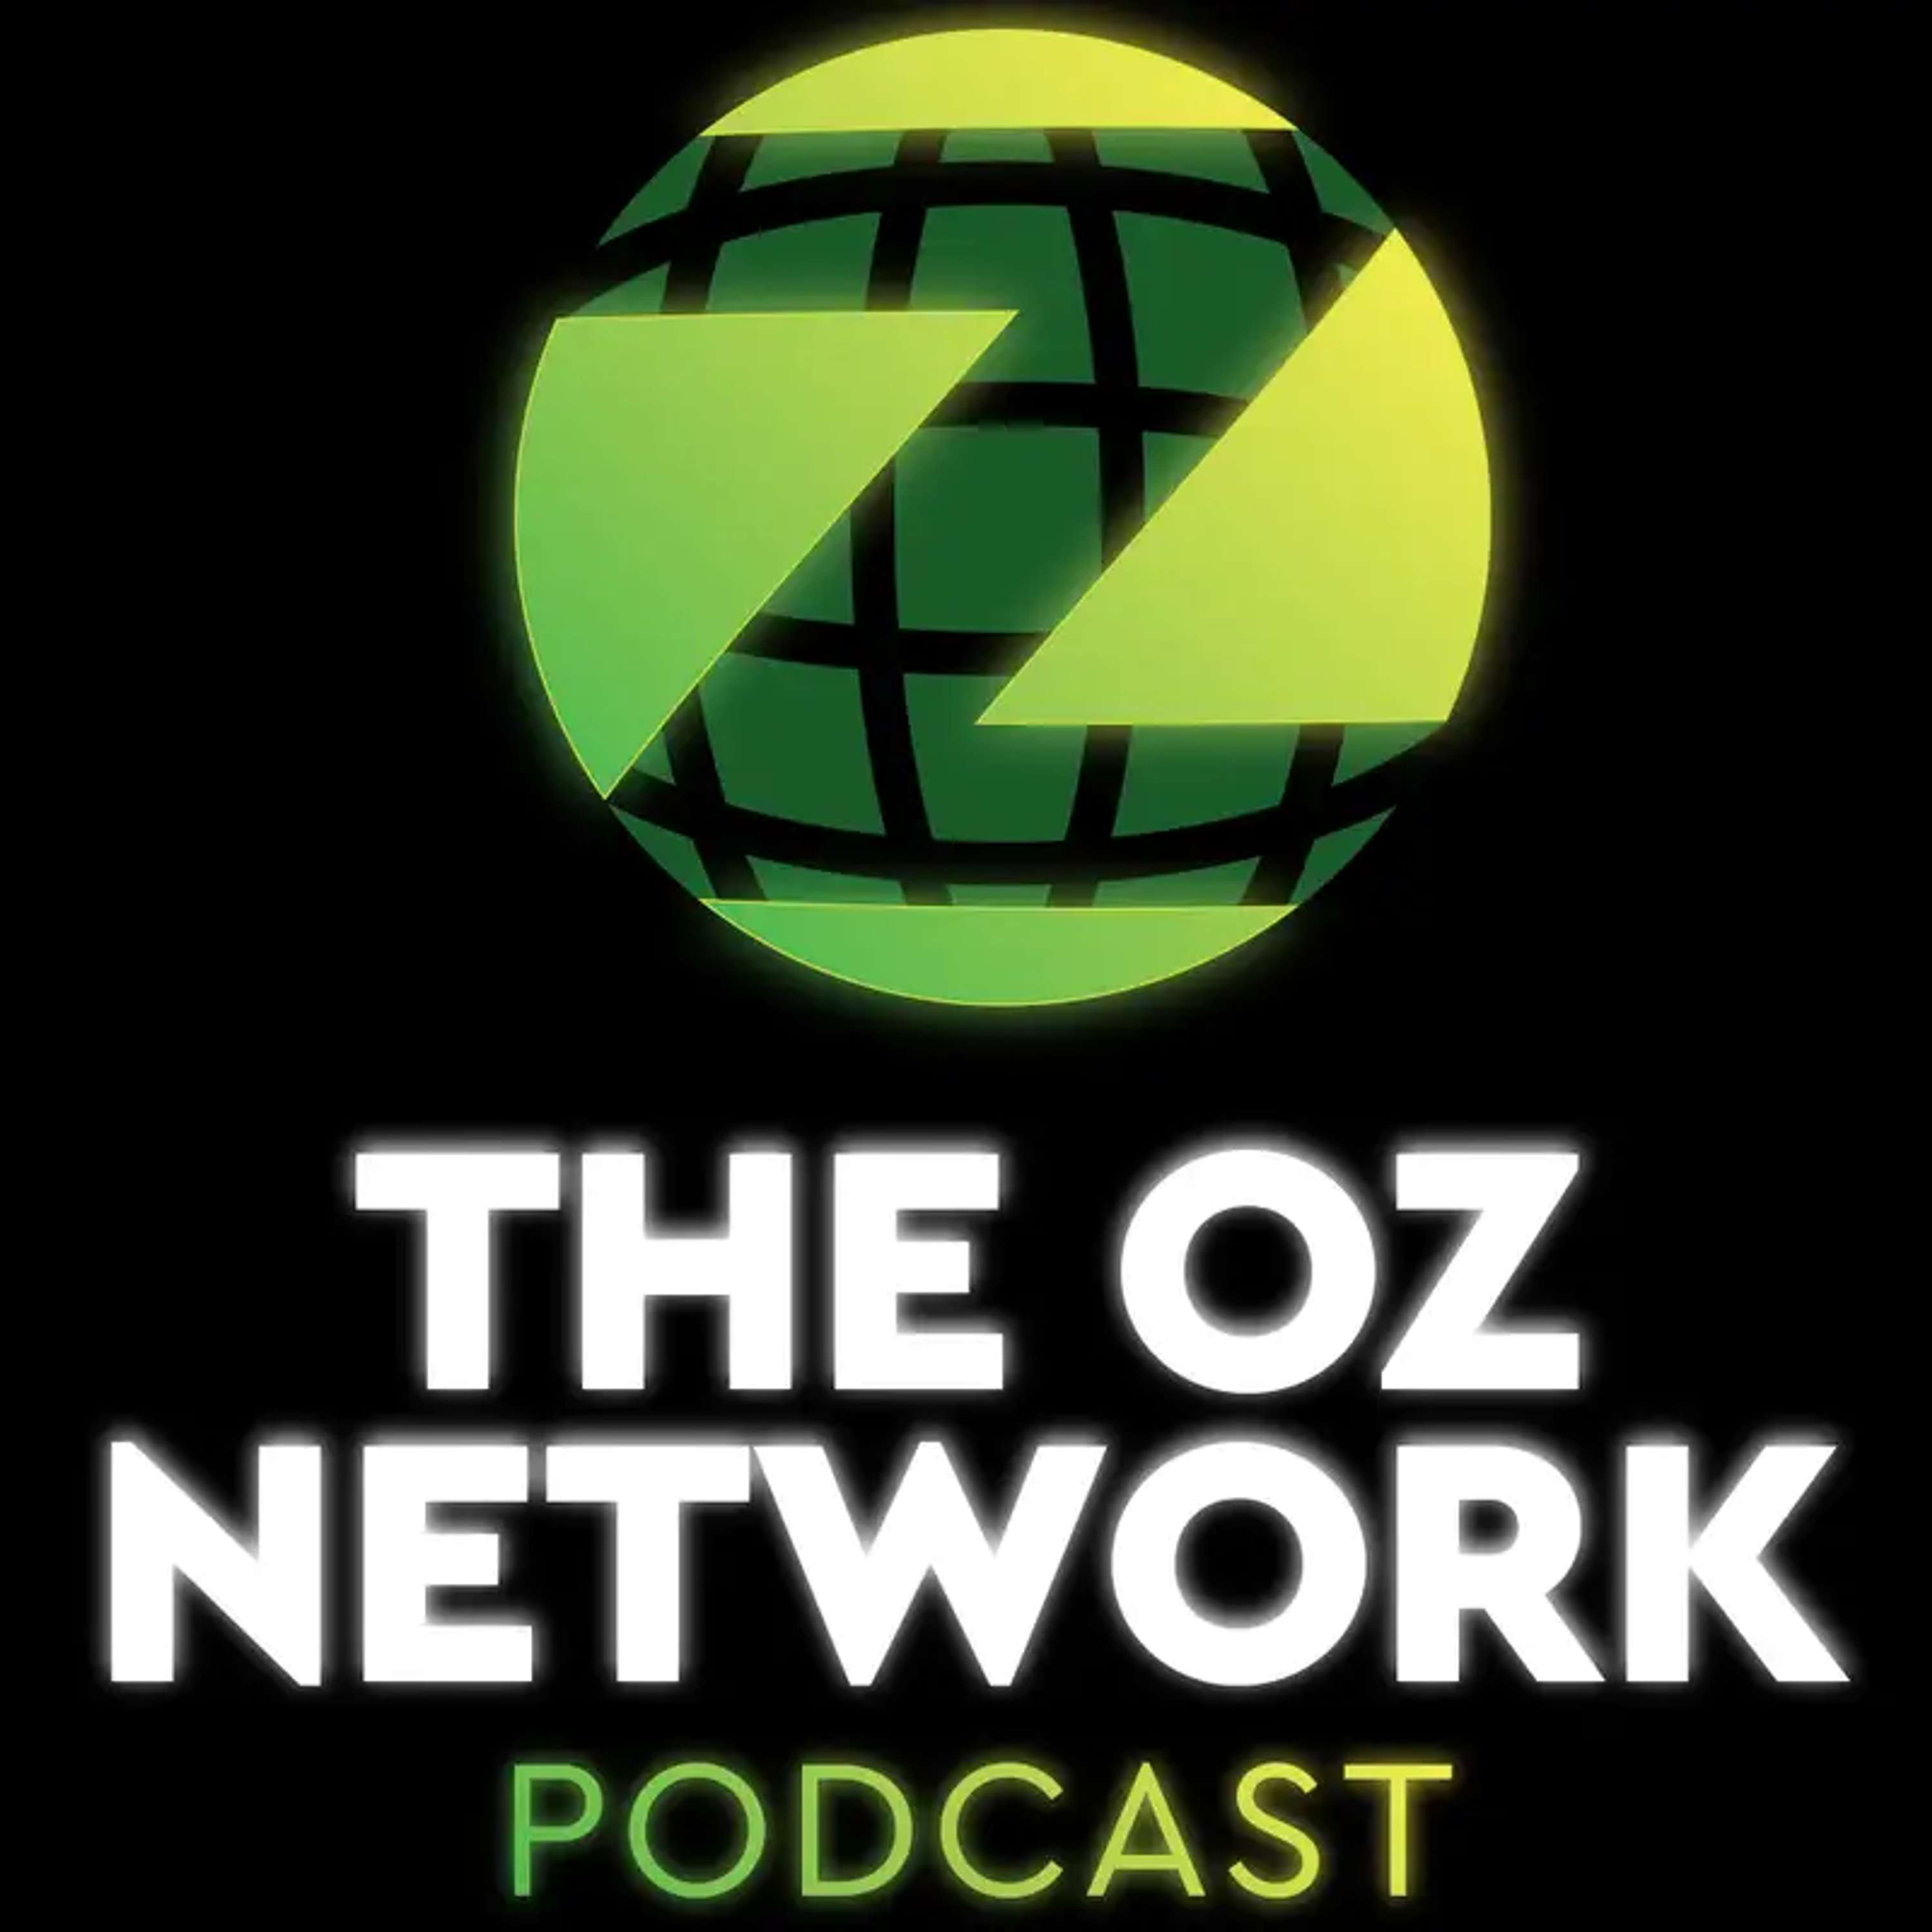 The Amazing Race Season 36, Episode 6 Recap - The Oz Network